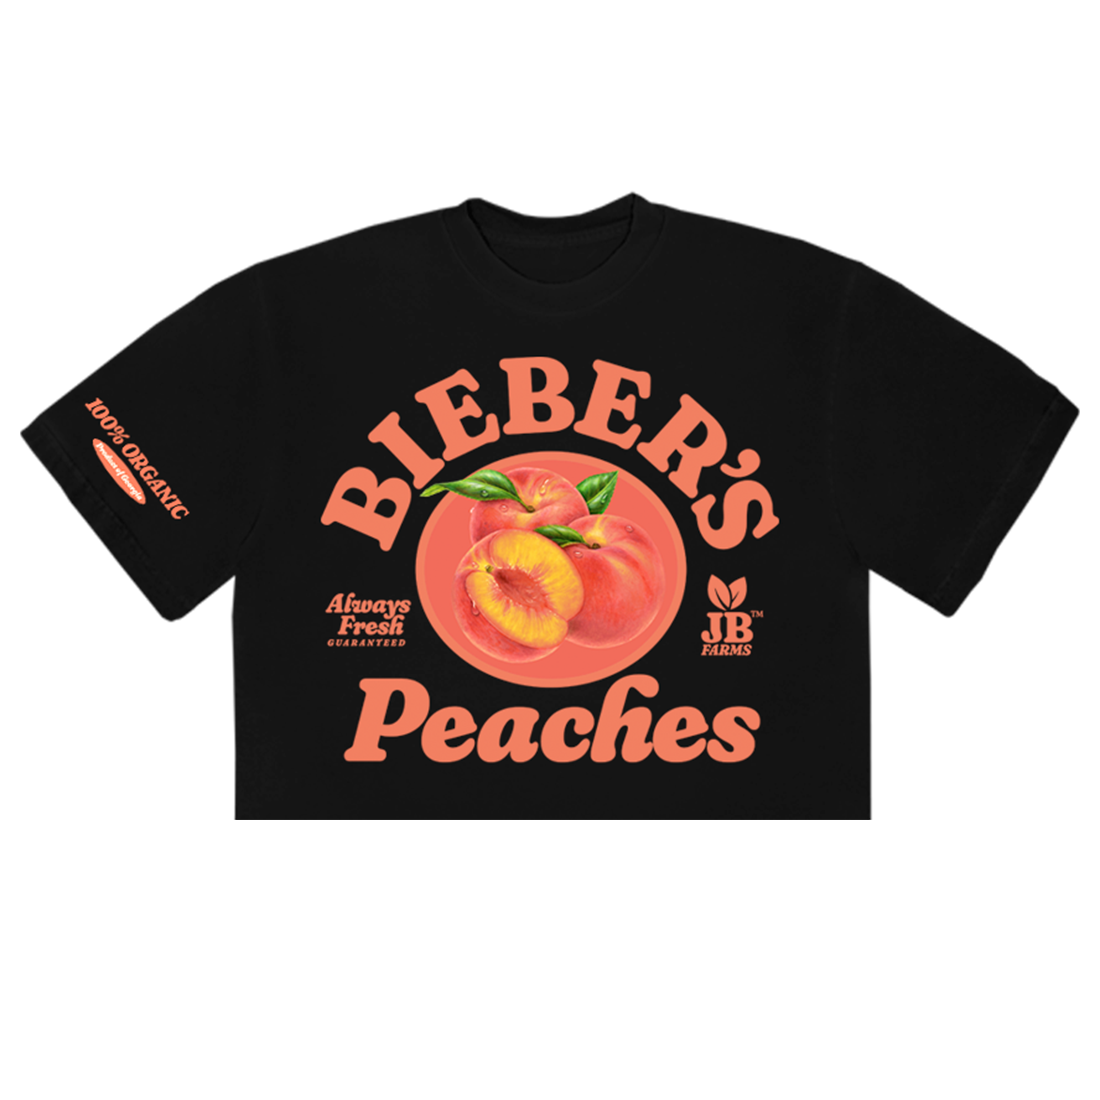 Peaches - Justin Bieber 